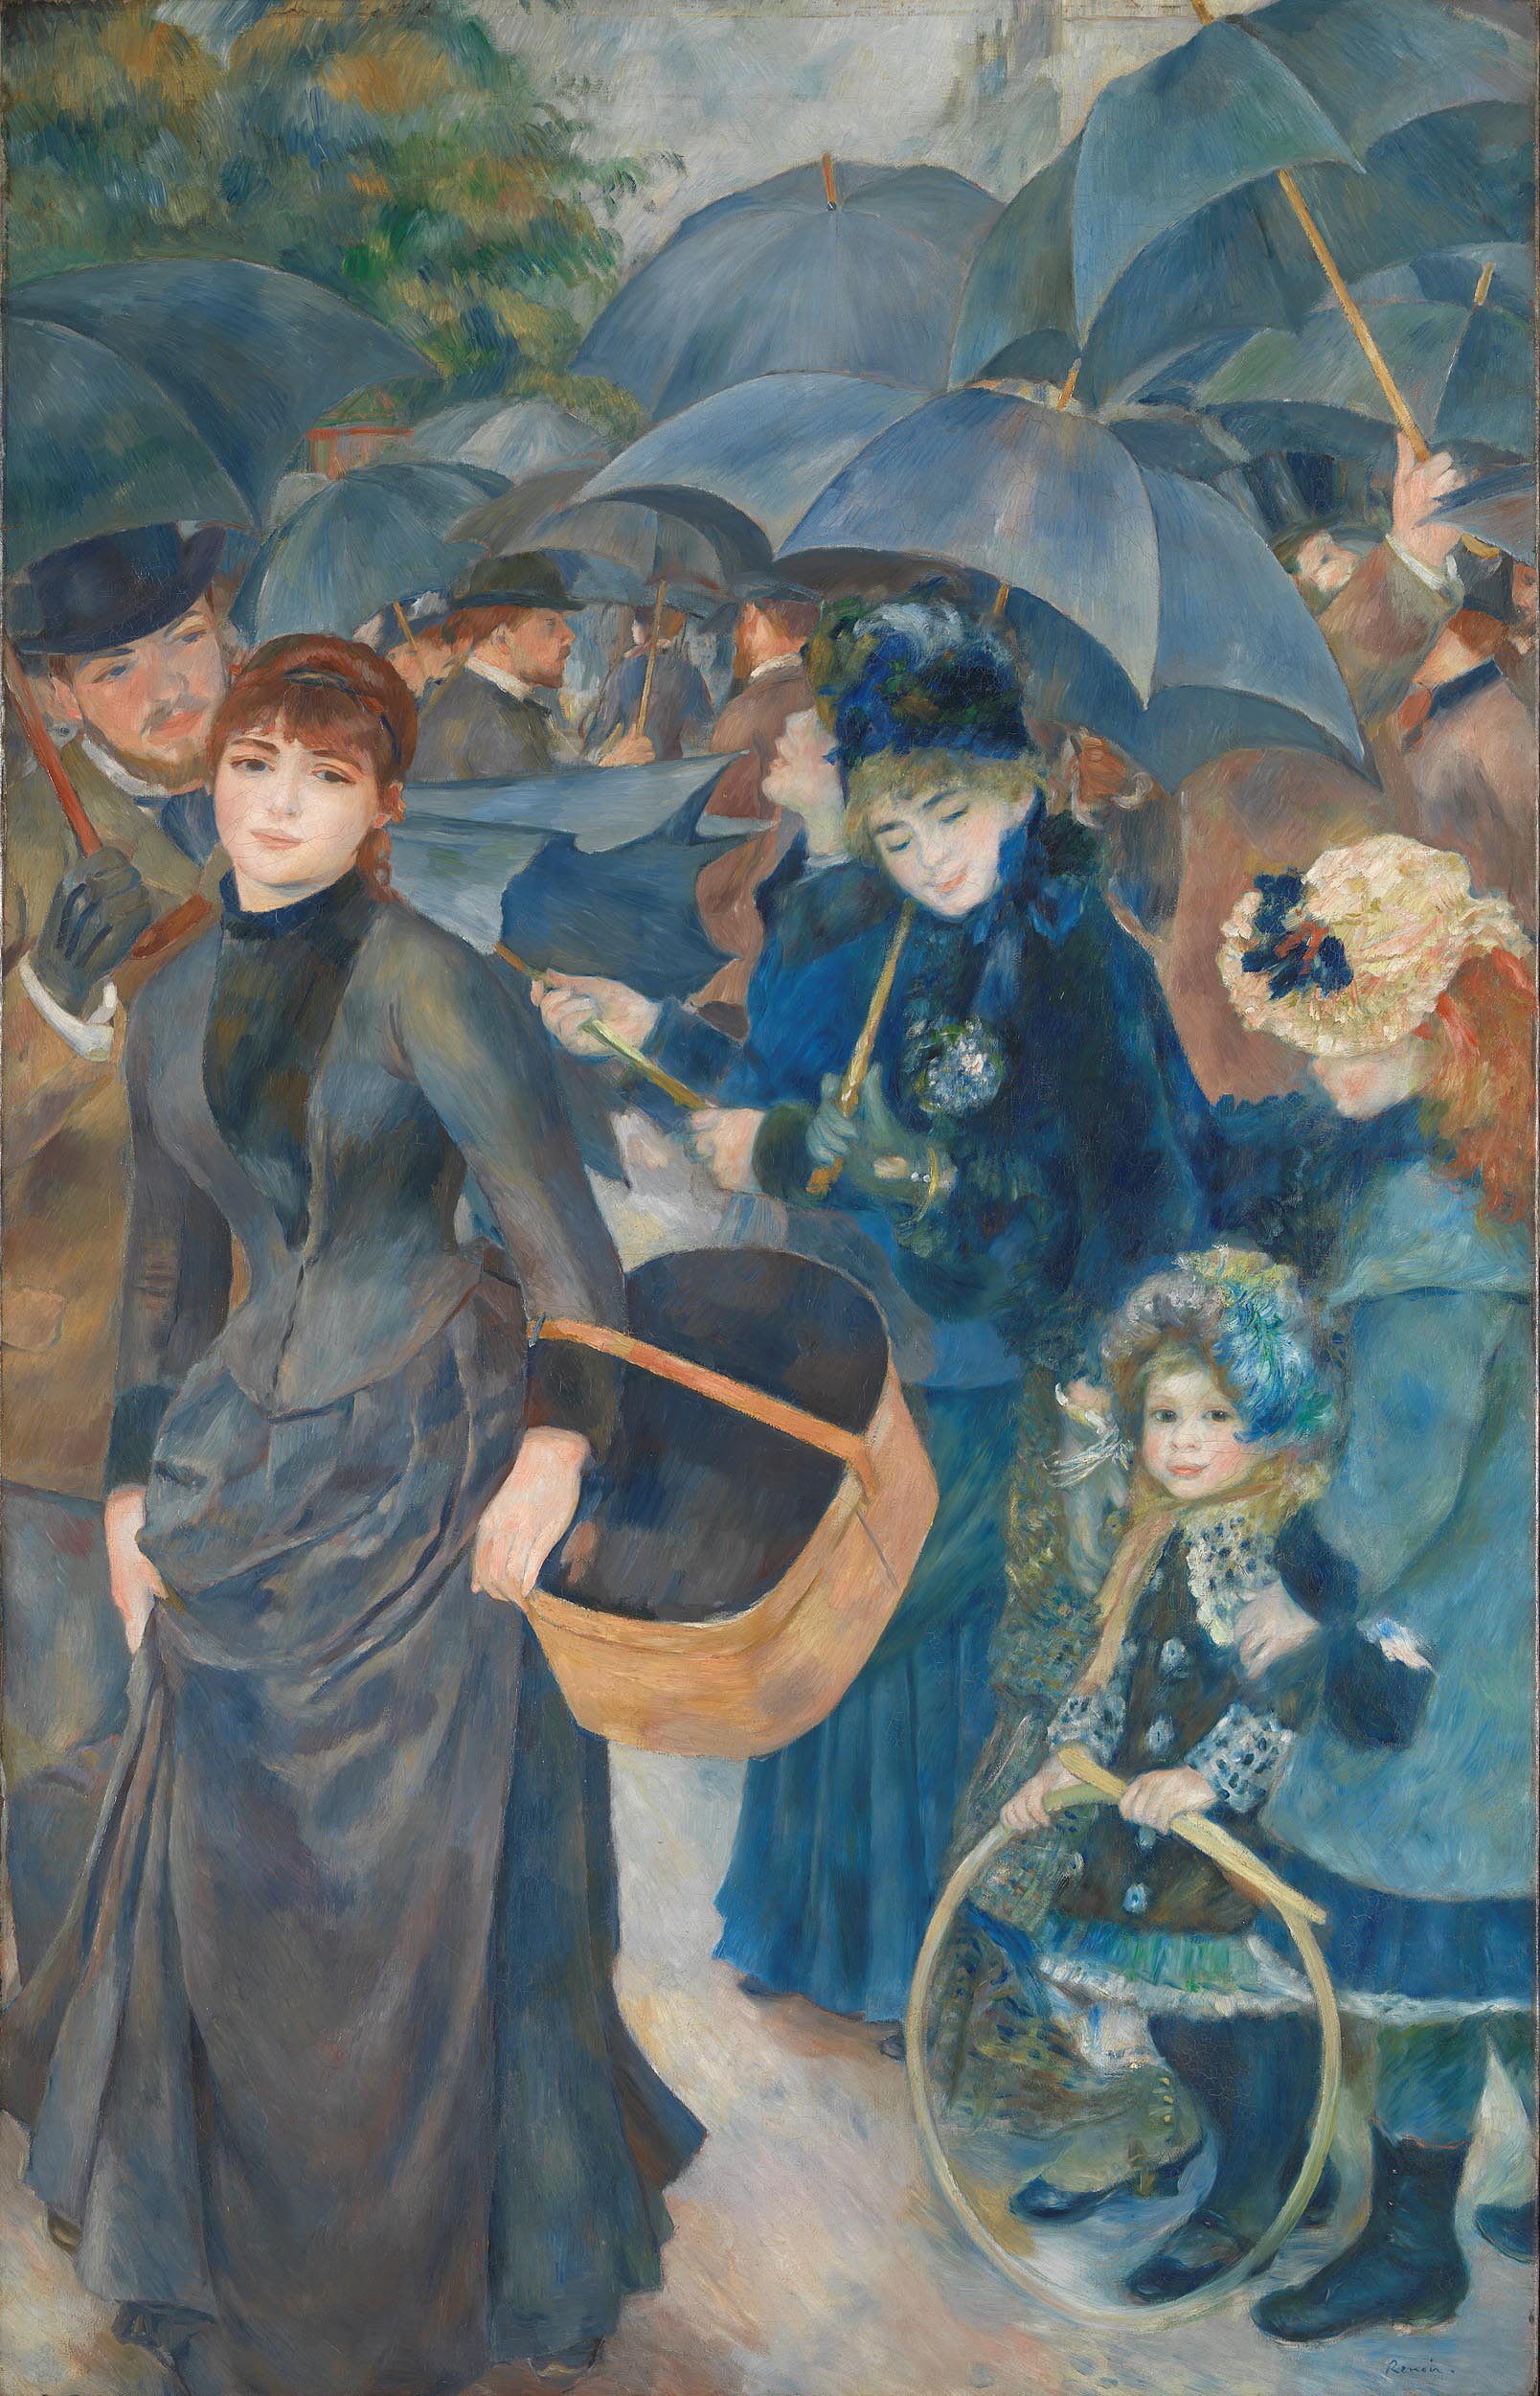 Afternoon Talk: Renoir and Impressionism